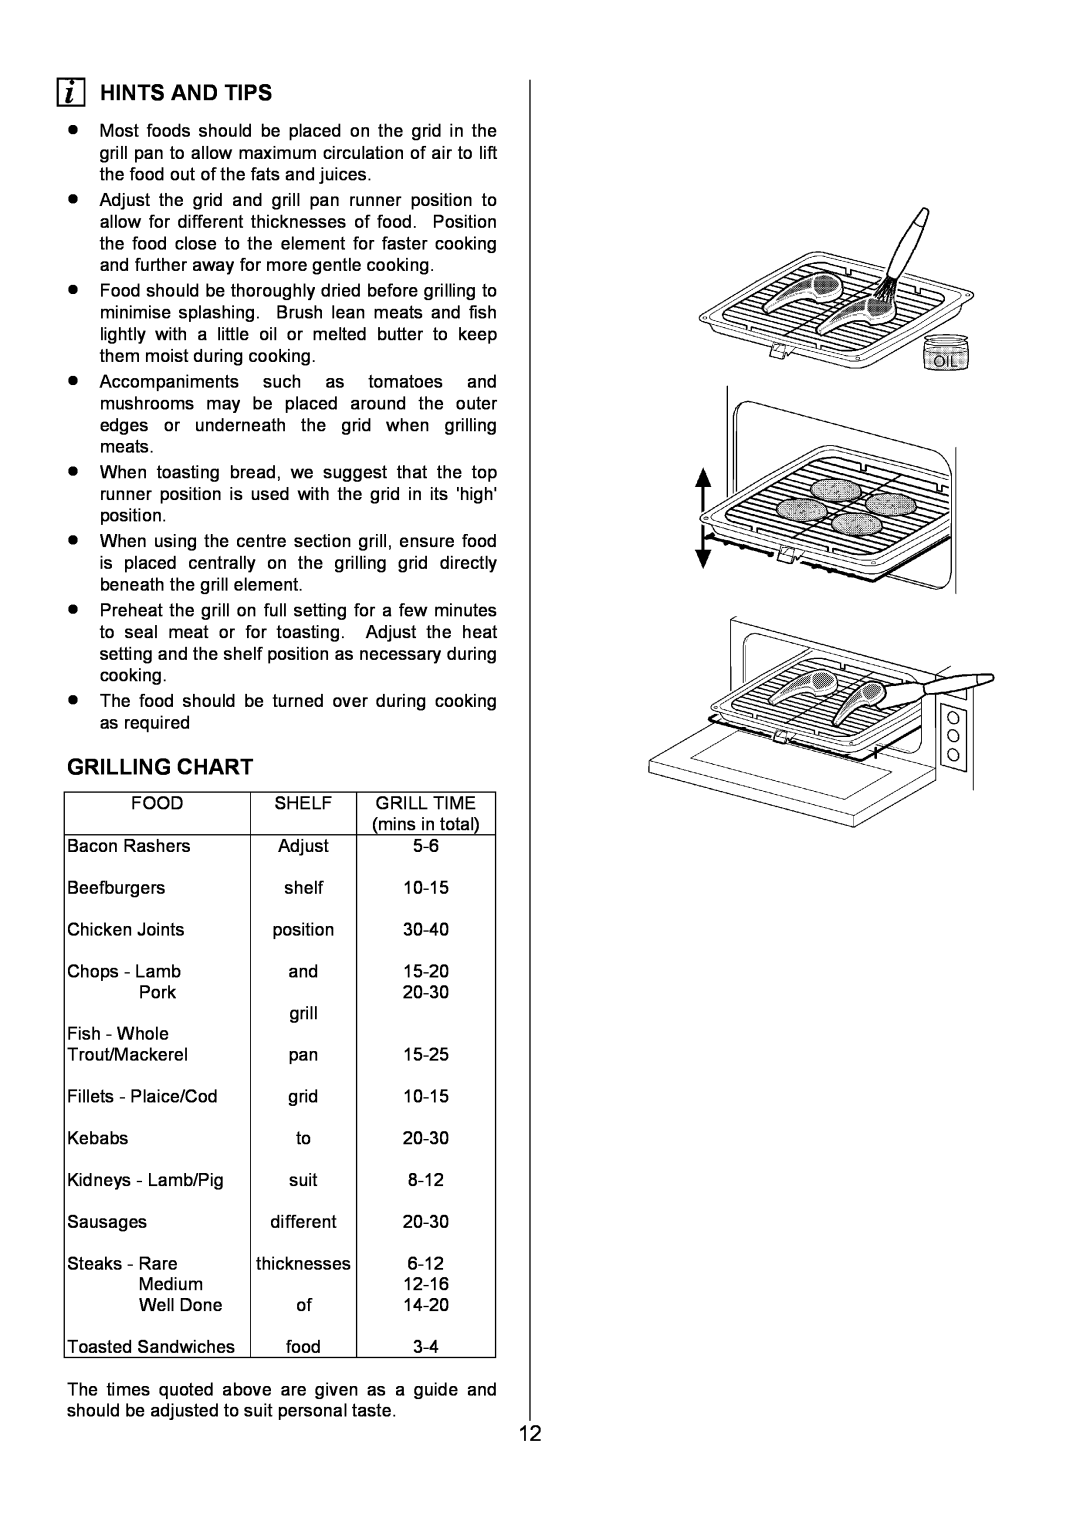 AEG U7101-4, 311704300 manual Hints And Tips, Grilling Chart 